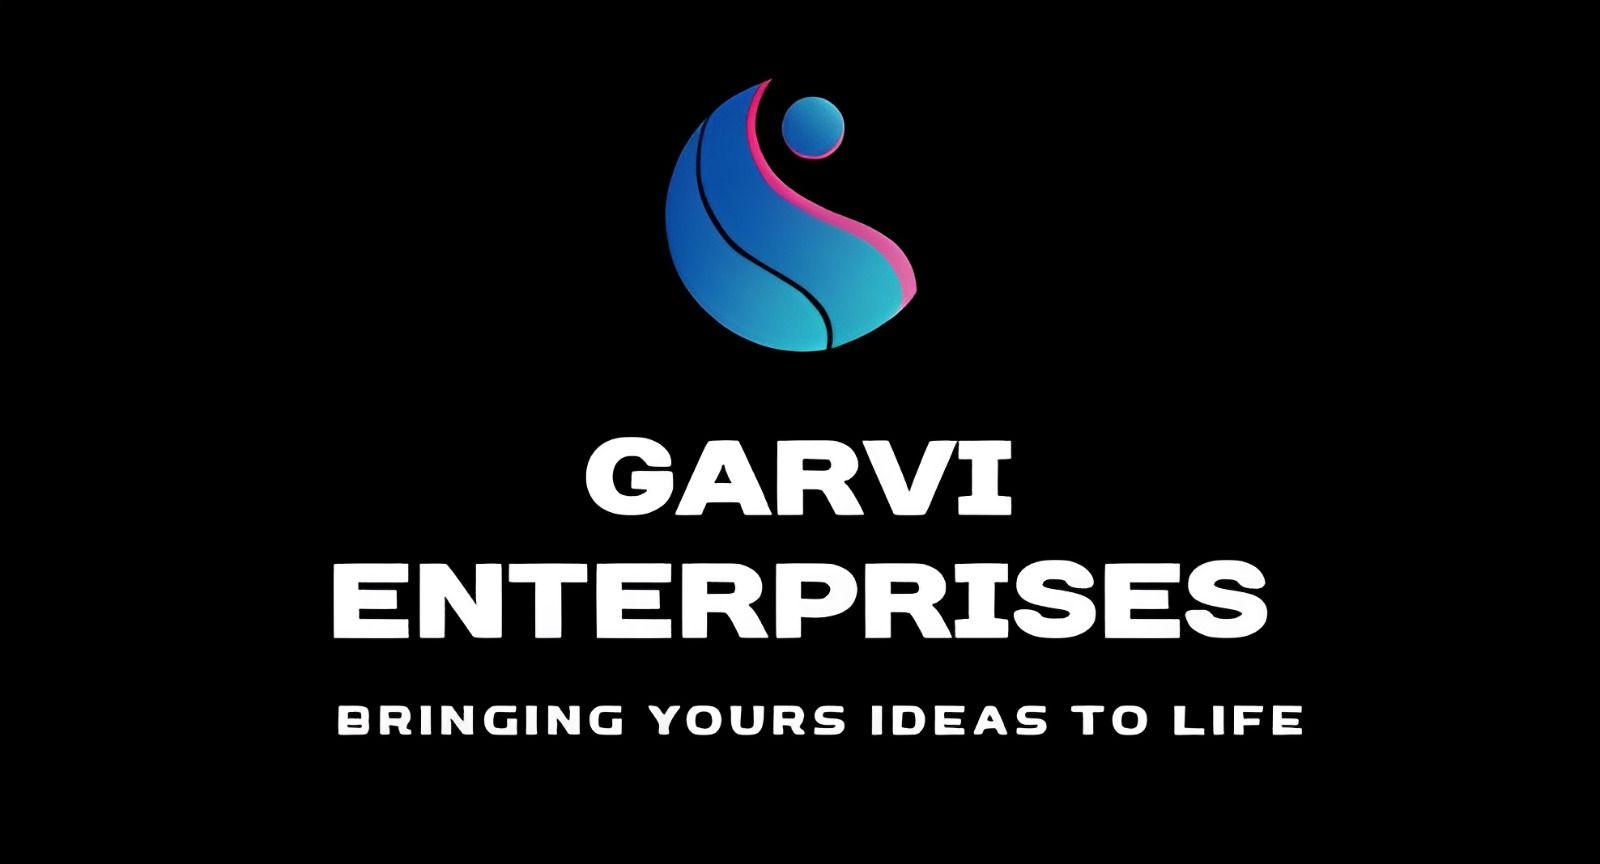 GARVI ENTERPRISES